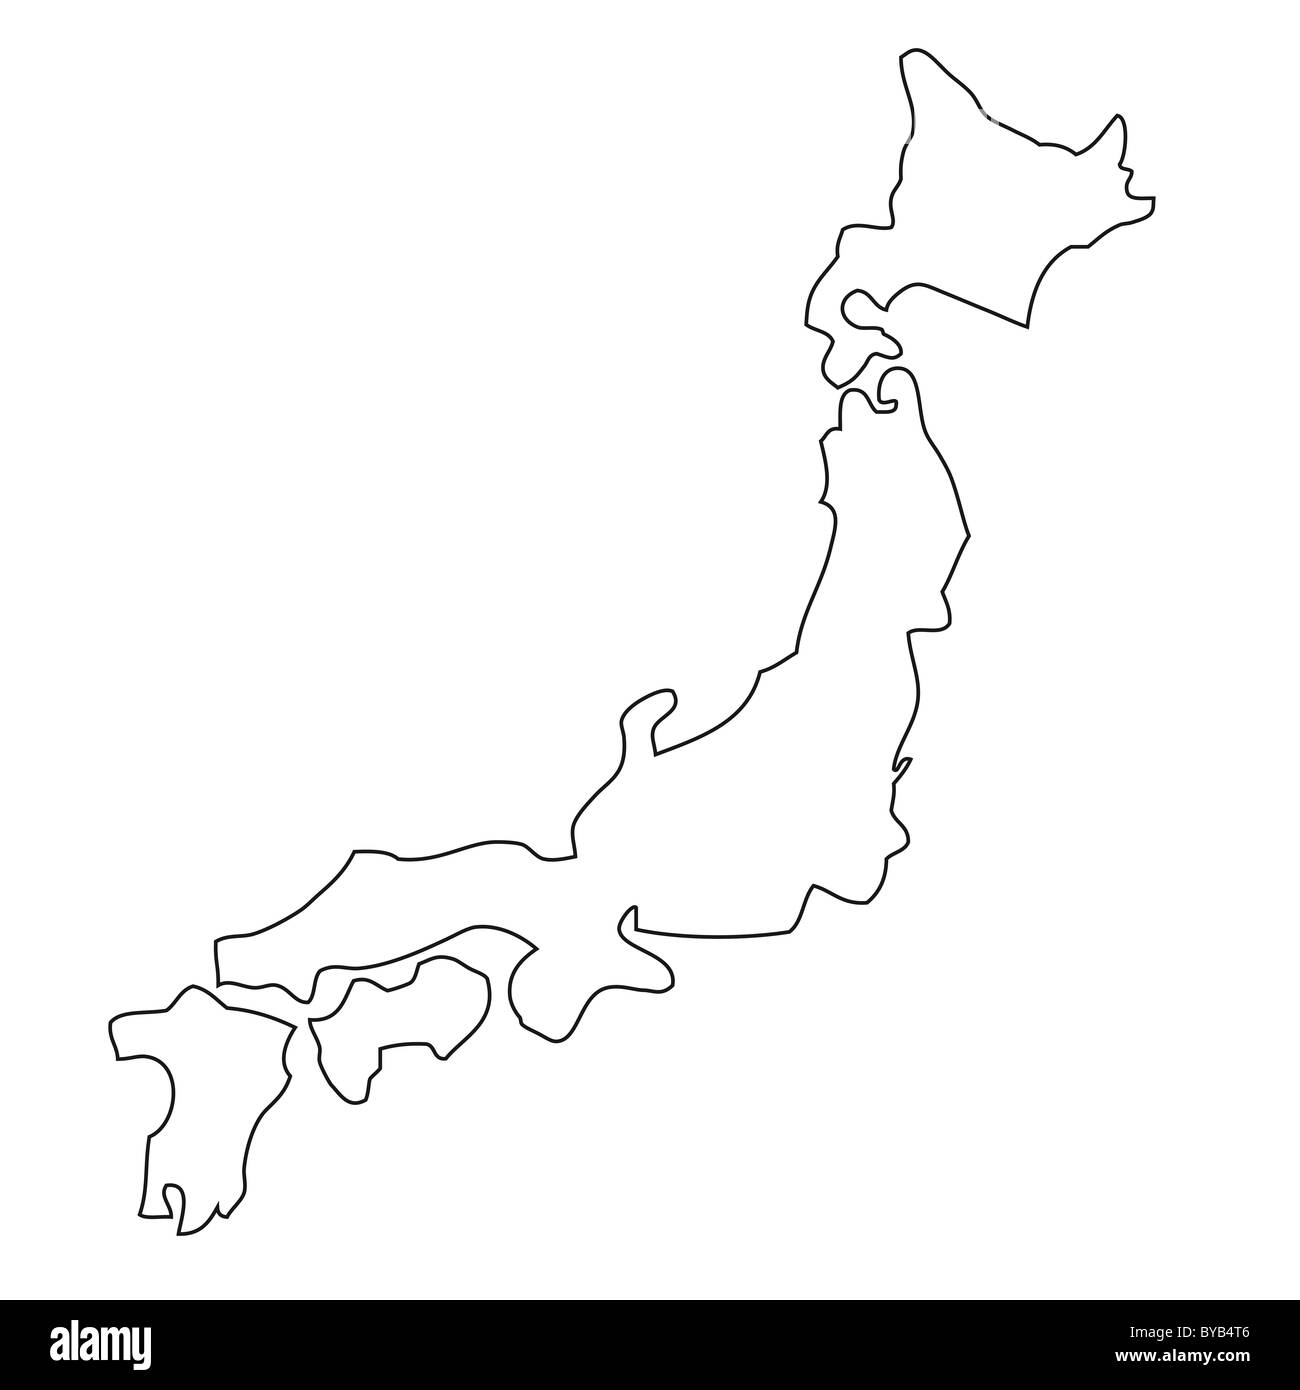 Outline Map Of Japan Outline, map of Japan Stock Photo   Alamy